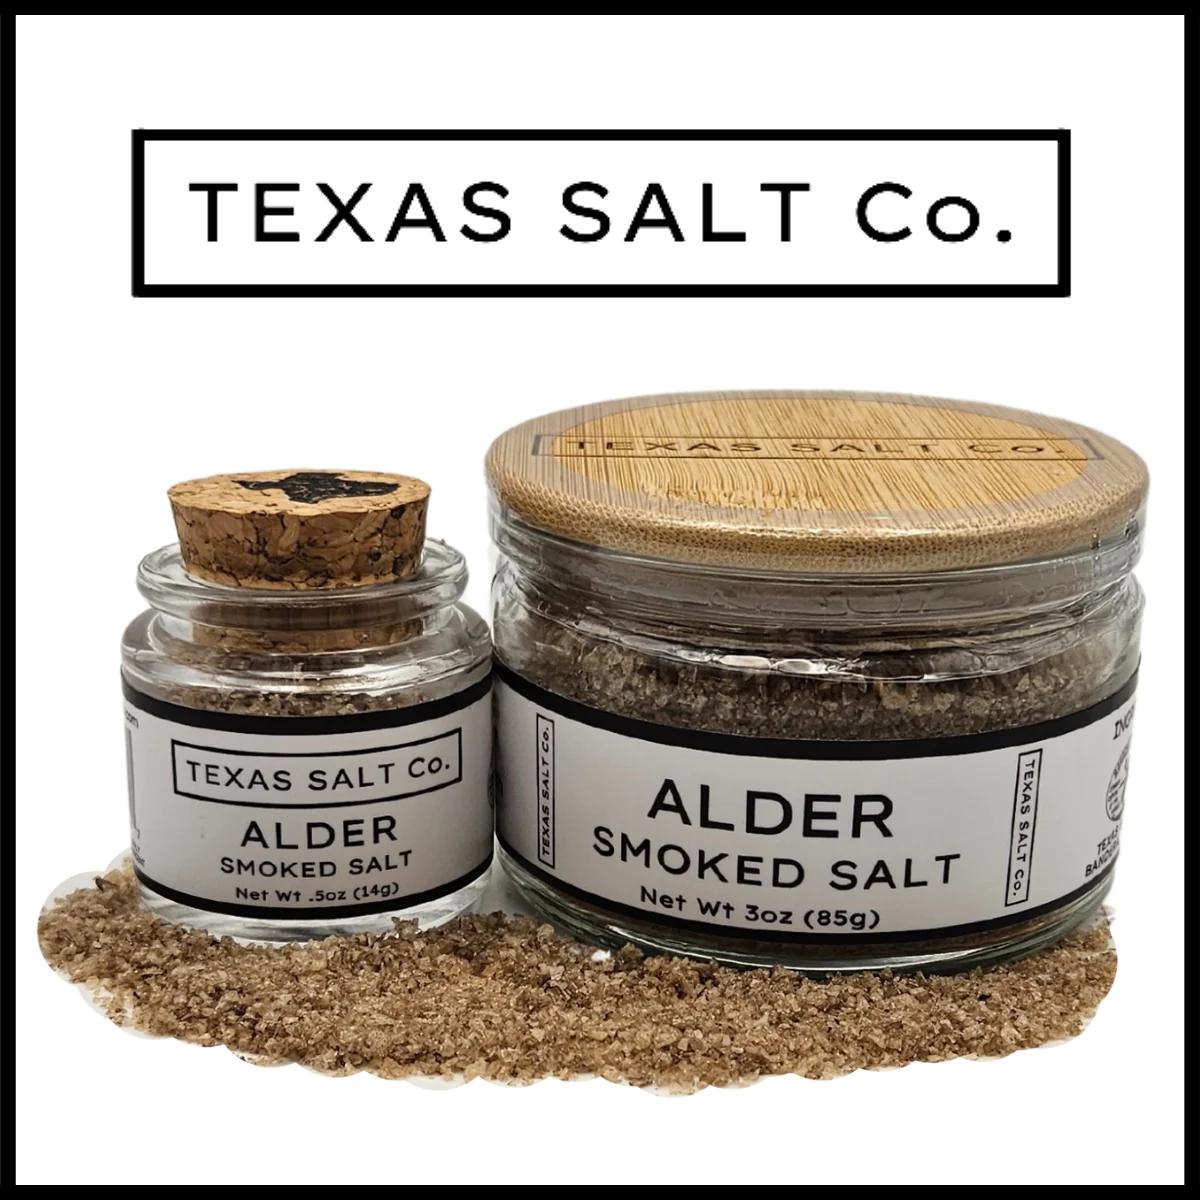 alder smoked salt - How do you use alderwood smoked salt